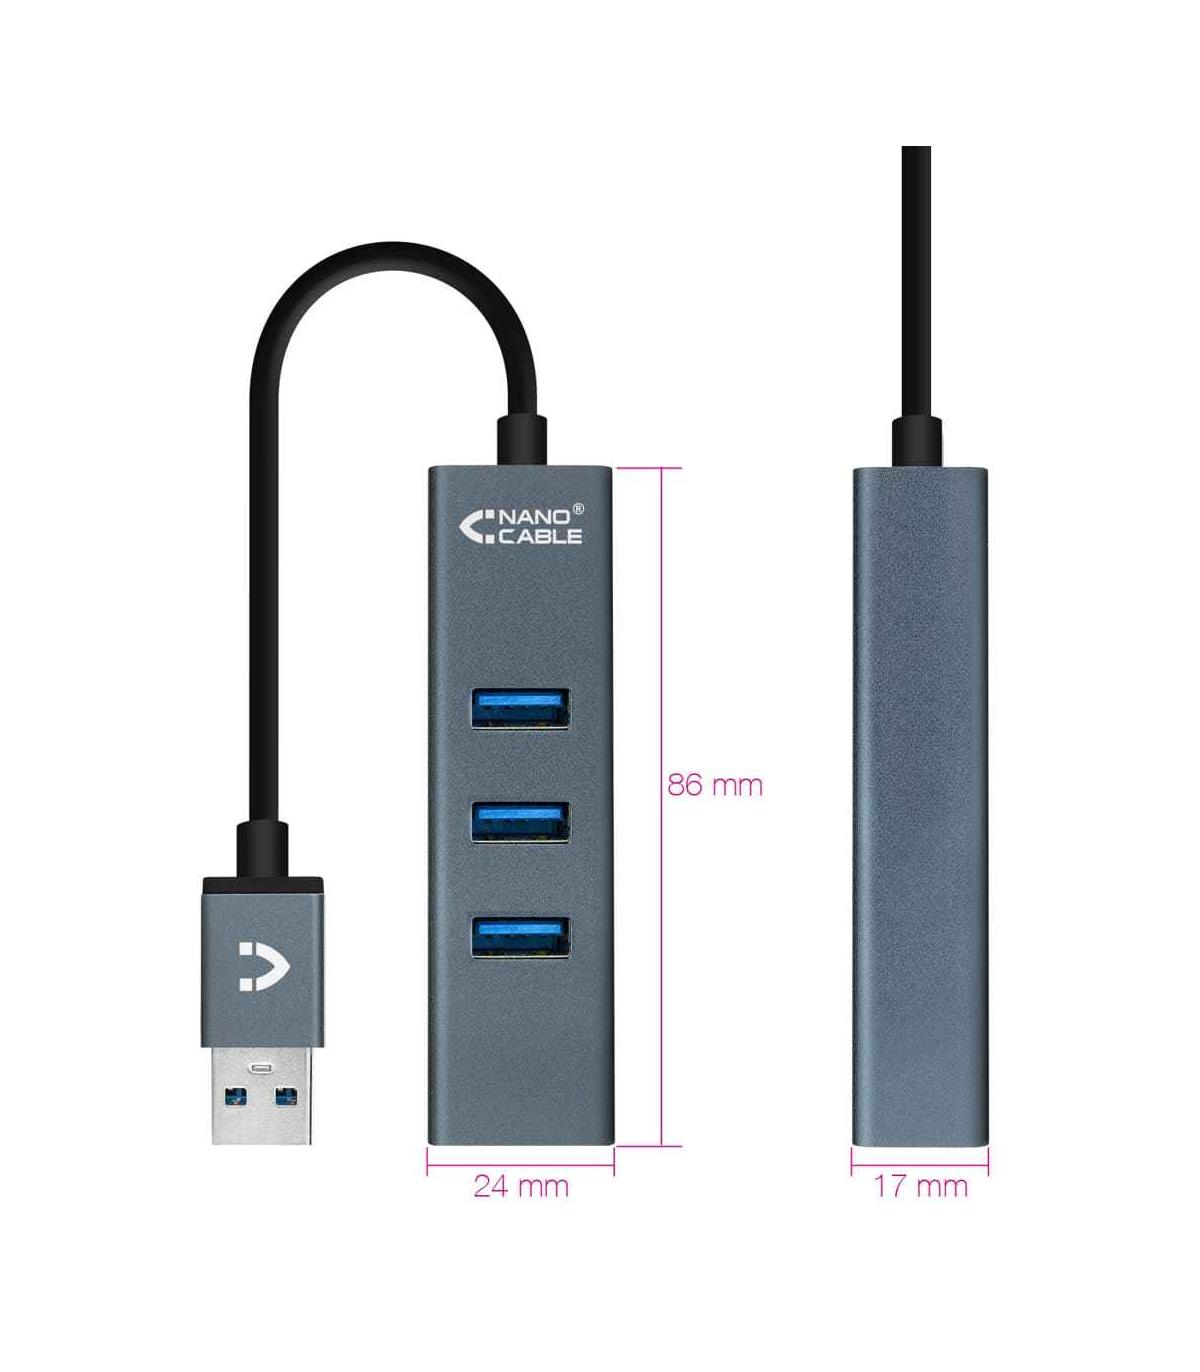 Hub Ladron USB 2.0 4 Puertos Portatil